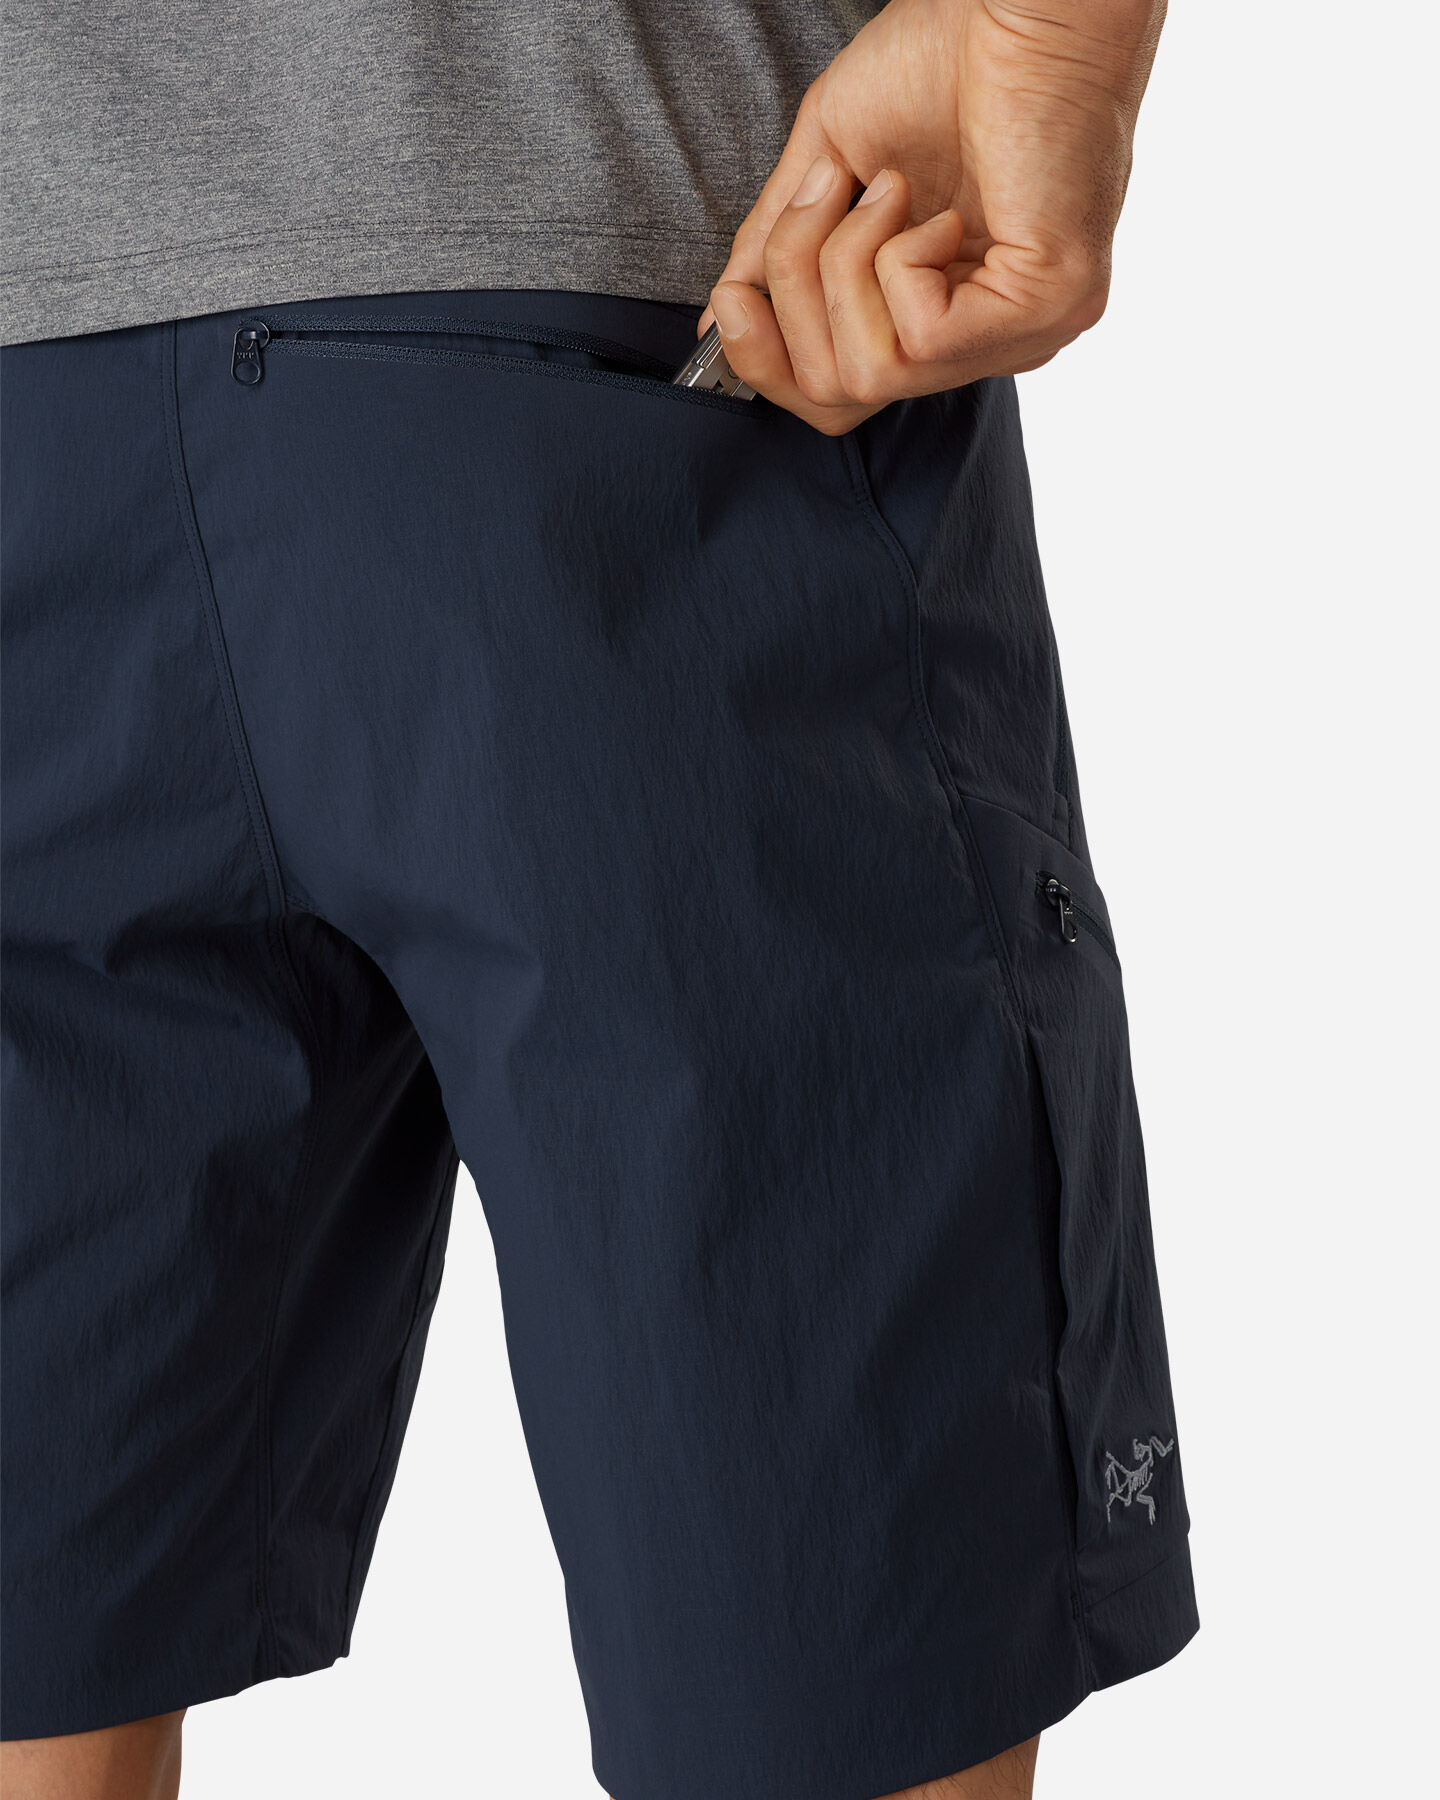  Pantaloncini ARC'TERYX PALISADE M S4075208|1|30 scatto 5